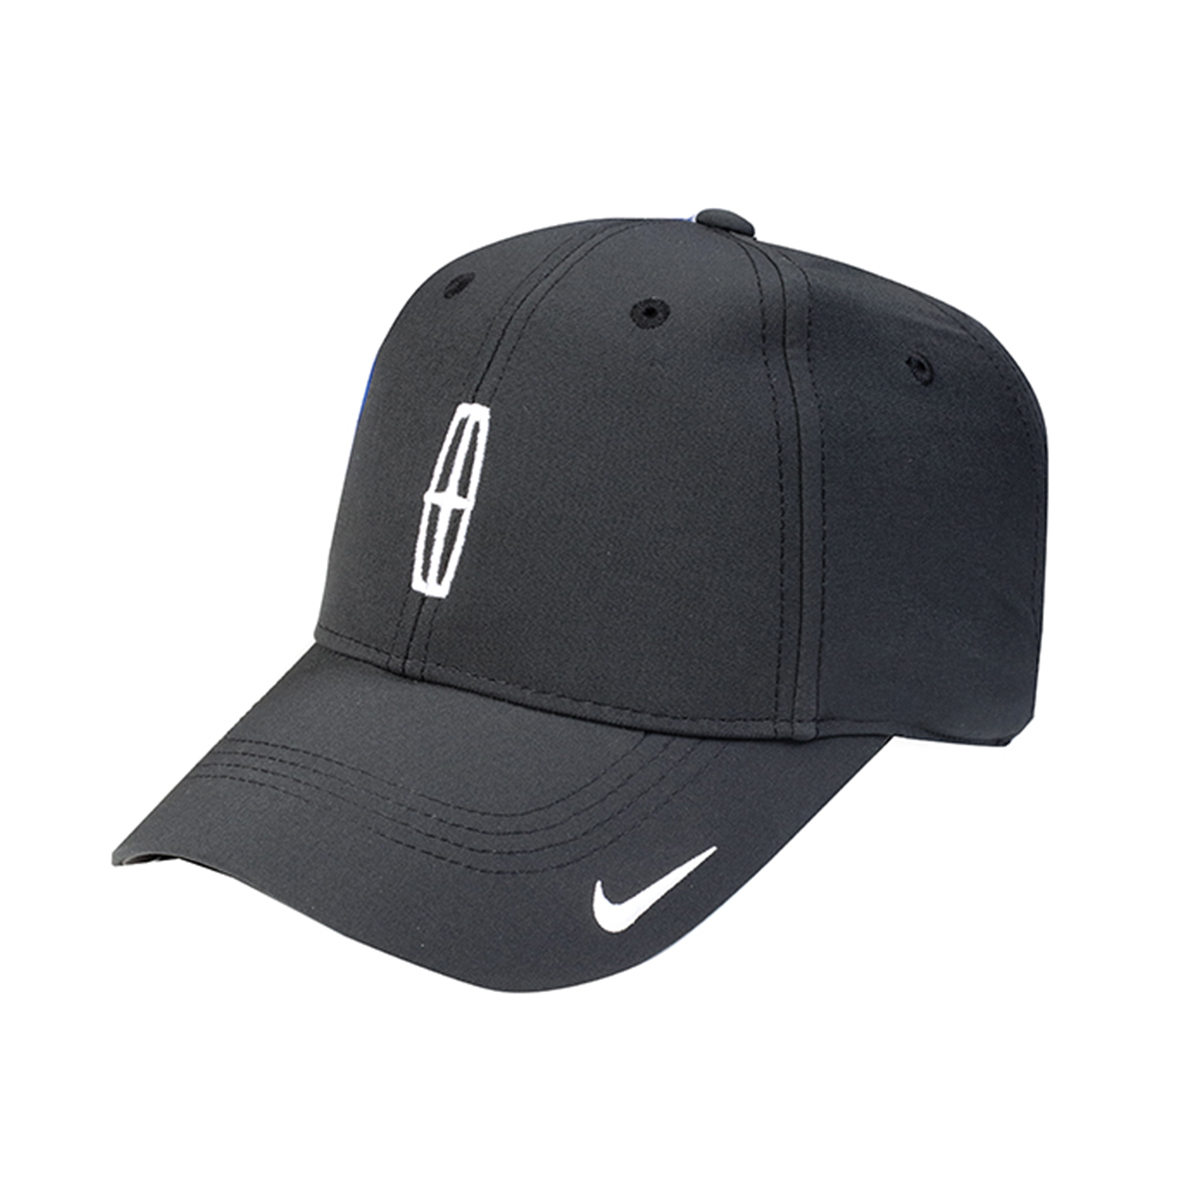 Nike Legacy Hat - Black - Lincoln Retailer